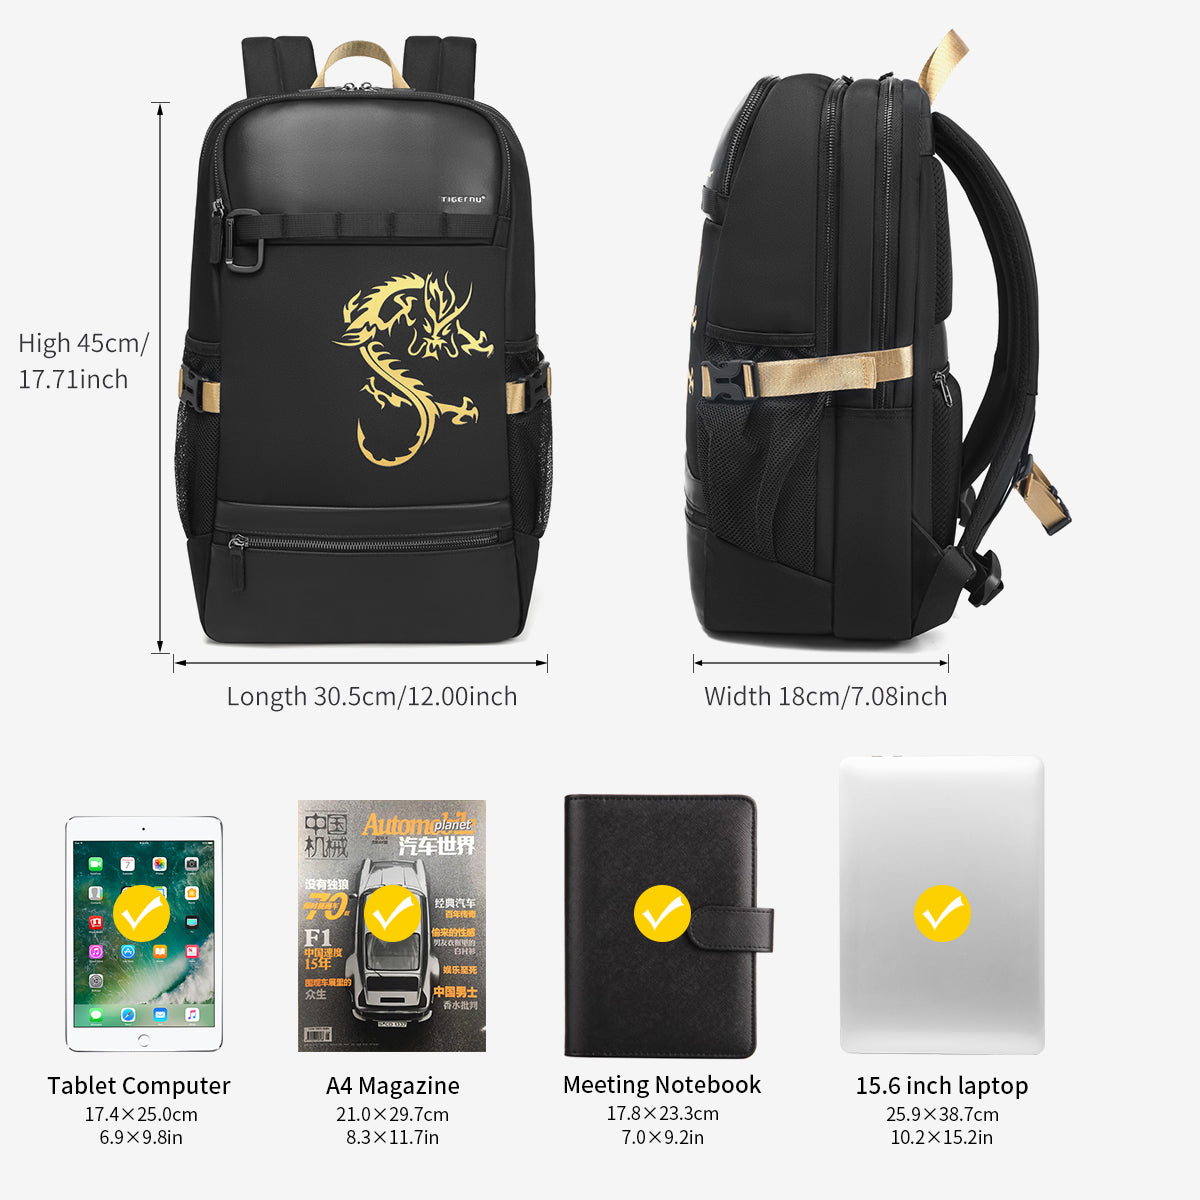 Tigernu T-B9029 Anti Theft 15.6 inch Laptop Backpack Bag Dragon Series with FREE Lock